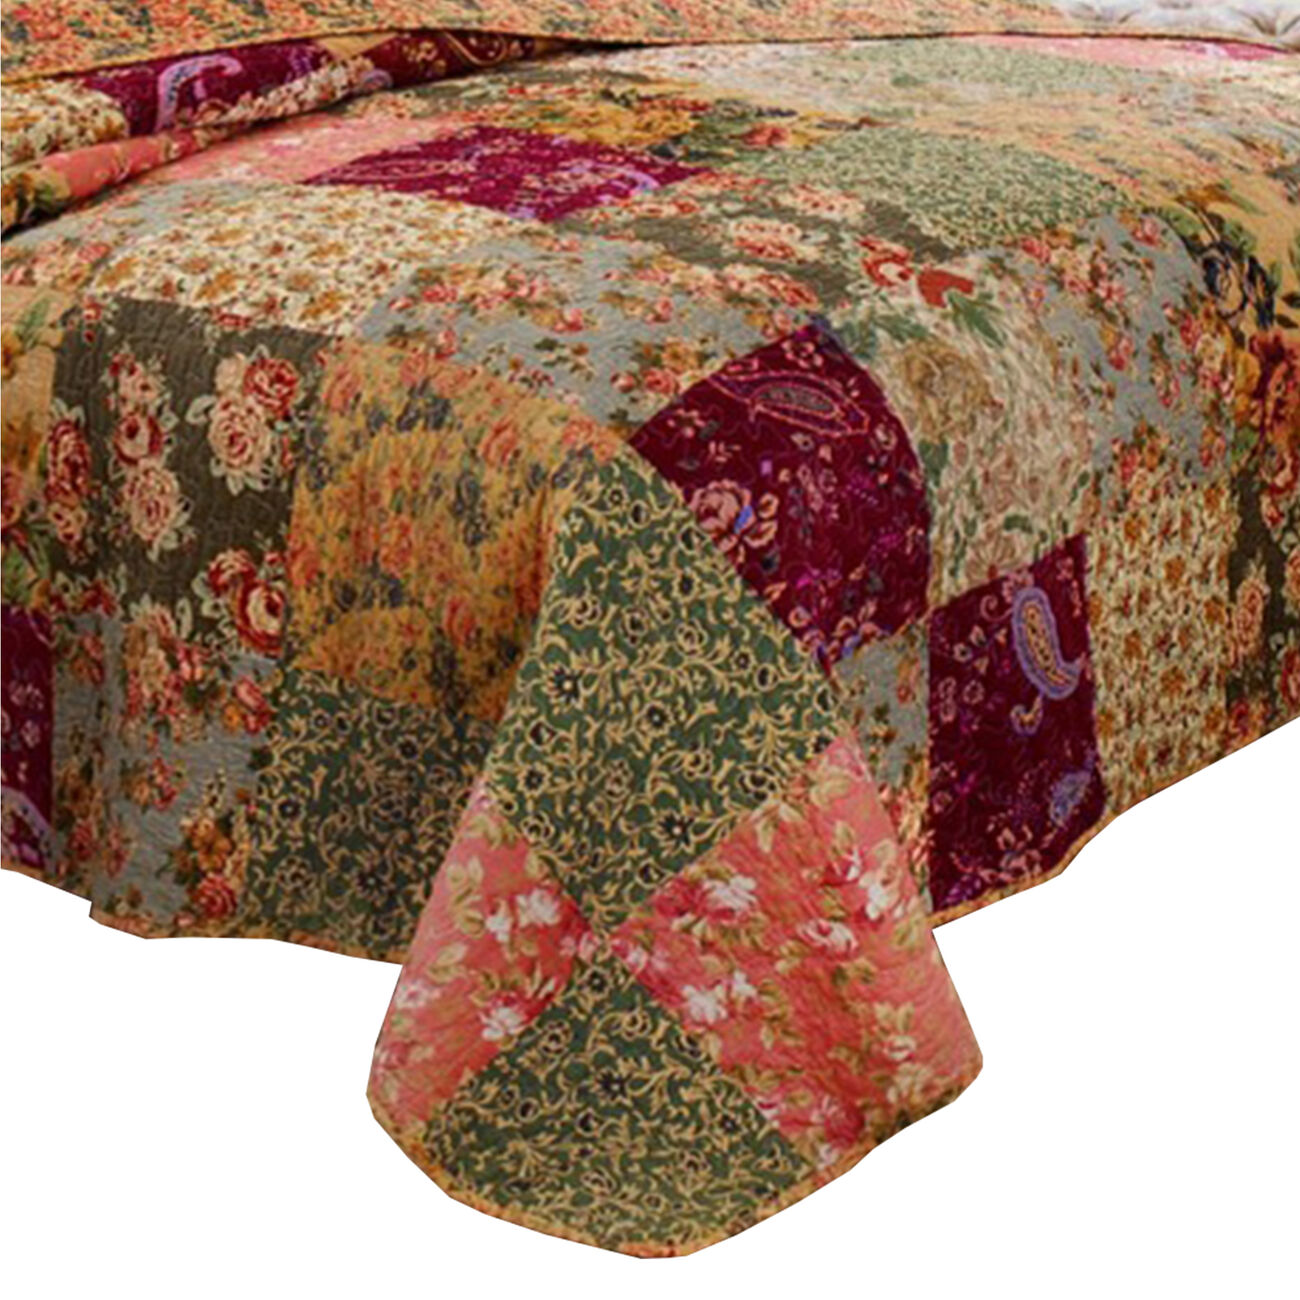 Kamet 2 Piece Fabric Twin Size Quilt Set with Floral Prints, Multicolor